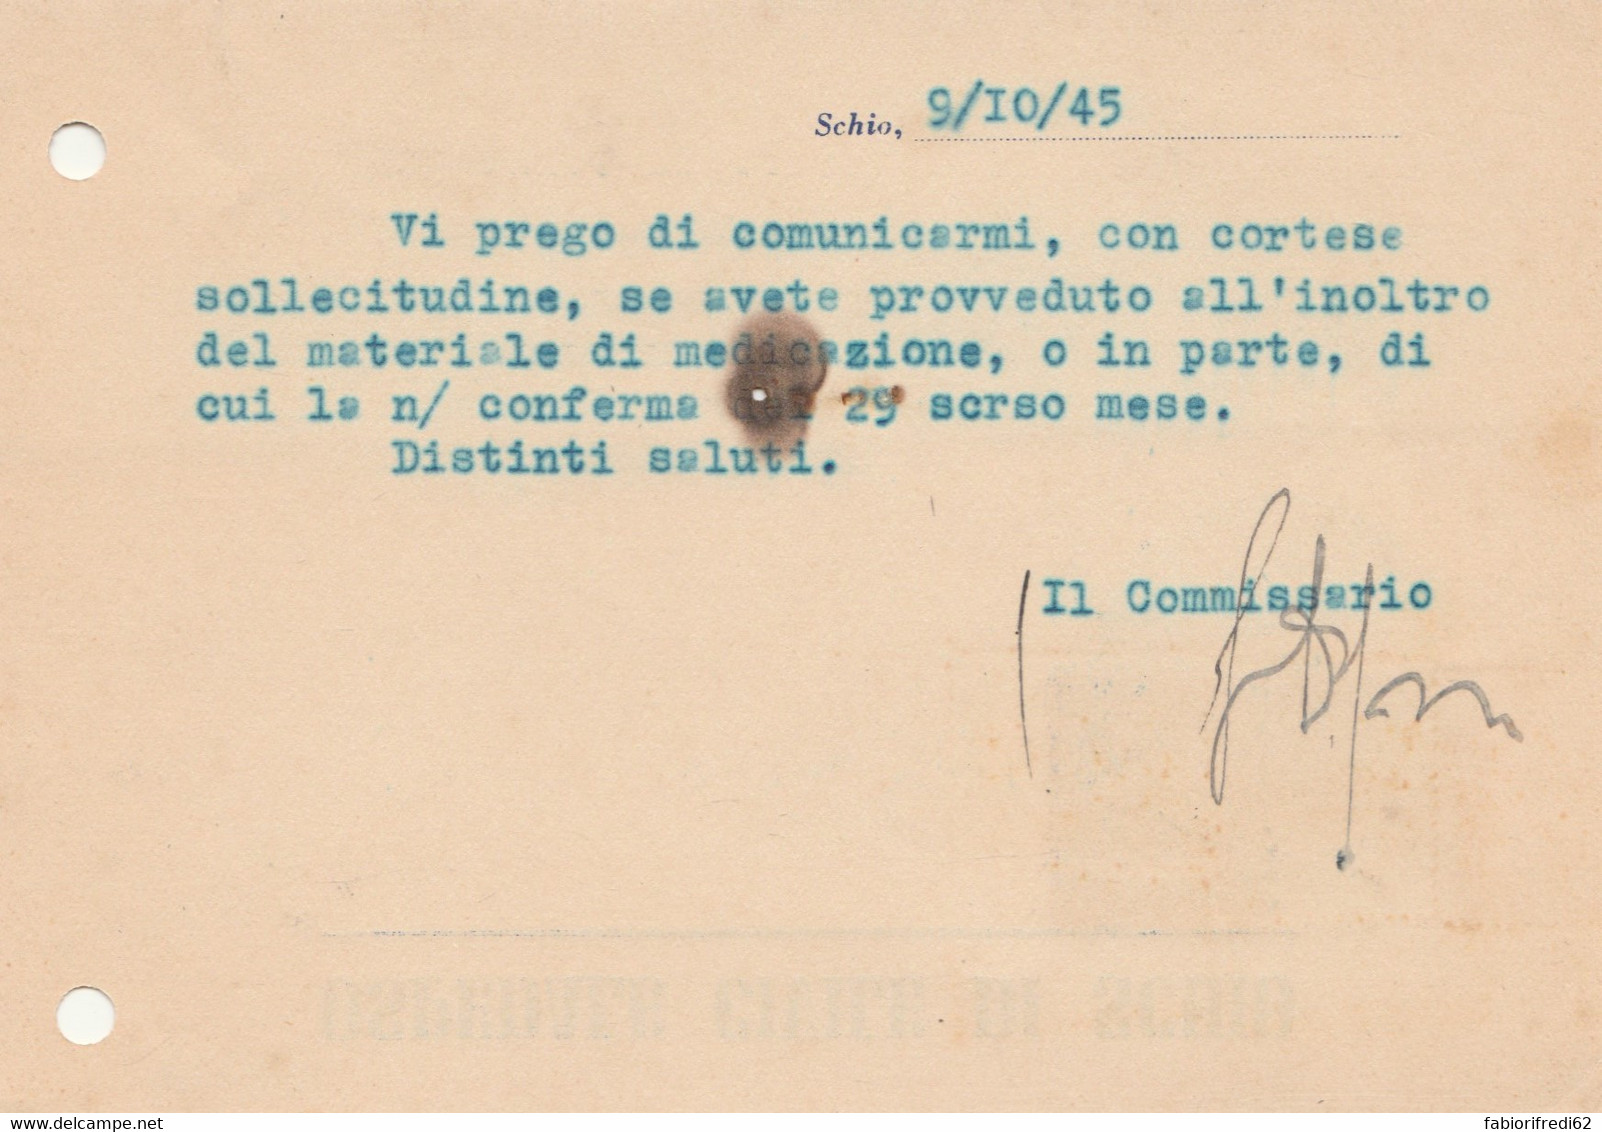 CARTOLINA POSTALE RSI 1+25 TIMBRO AZZURRO VICENZA 1945 (RY643 - Marcophilie